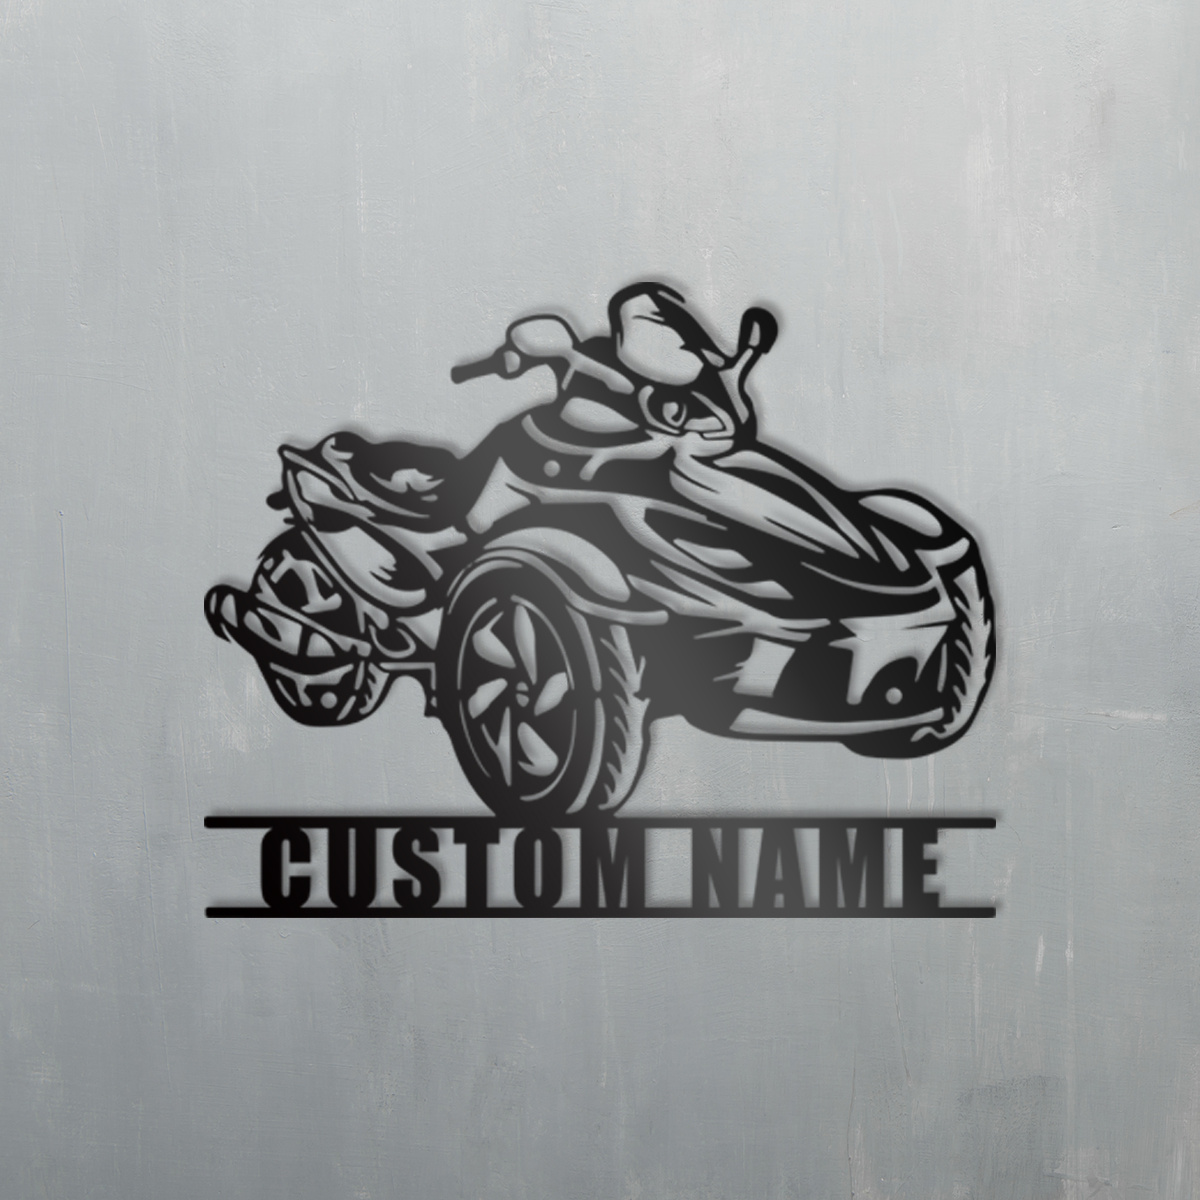 

1pc Custom Spyder Metal Wall Art Personalized Dirt Bike Name Sign Home 3 Wheel Motorcycle Decor Biker Decoration Man Cave